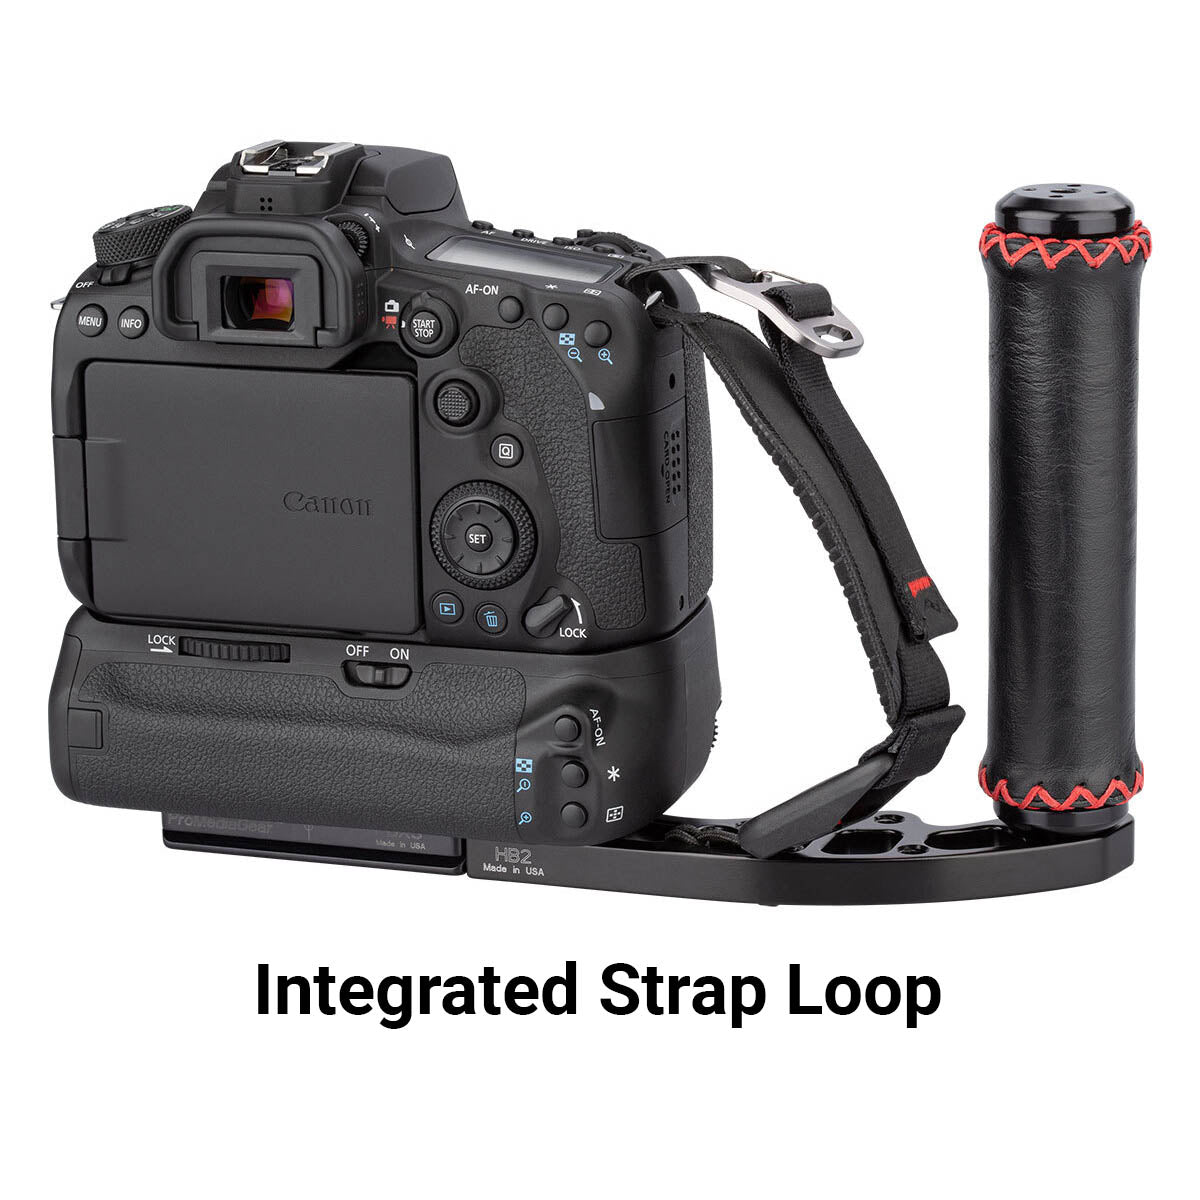 integrated strap loop